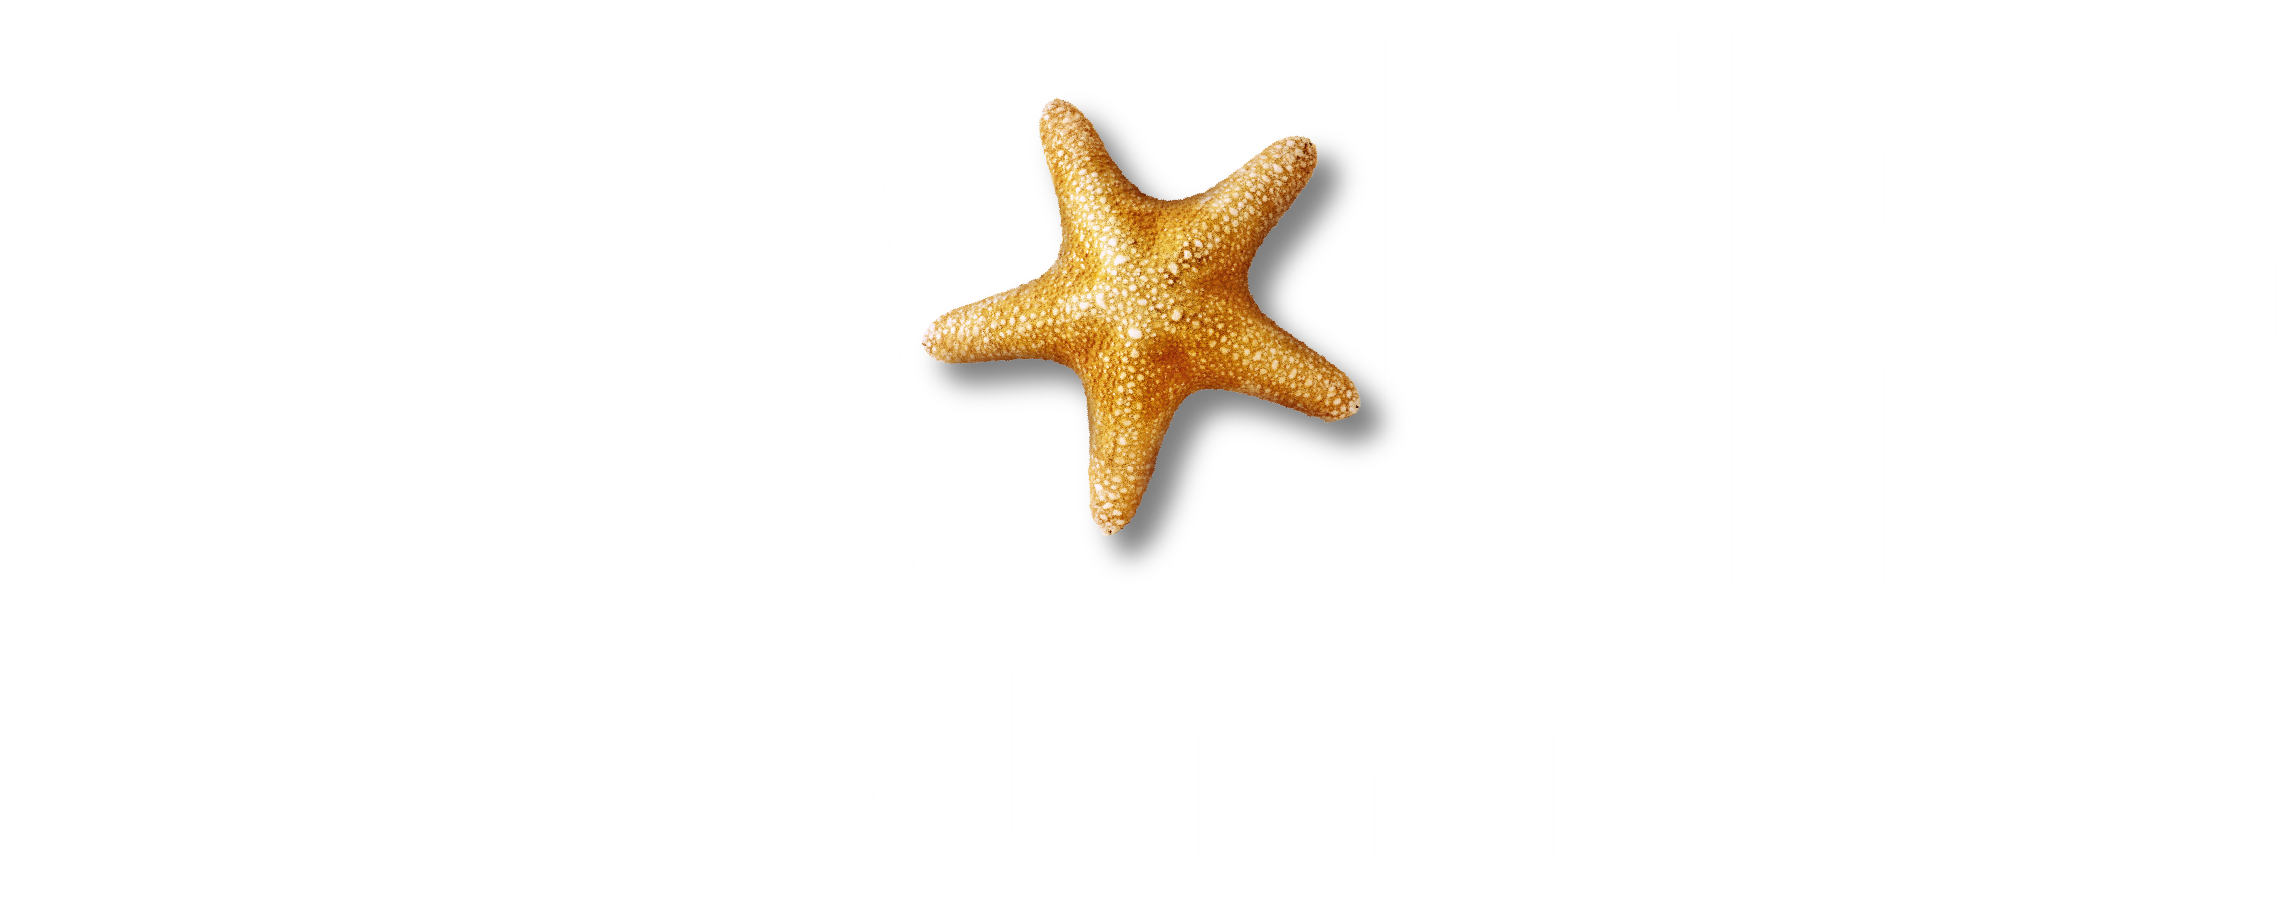 SEA LIFE + Helsinki (White Text) RGB